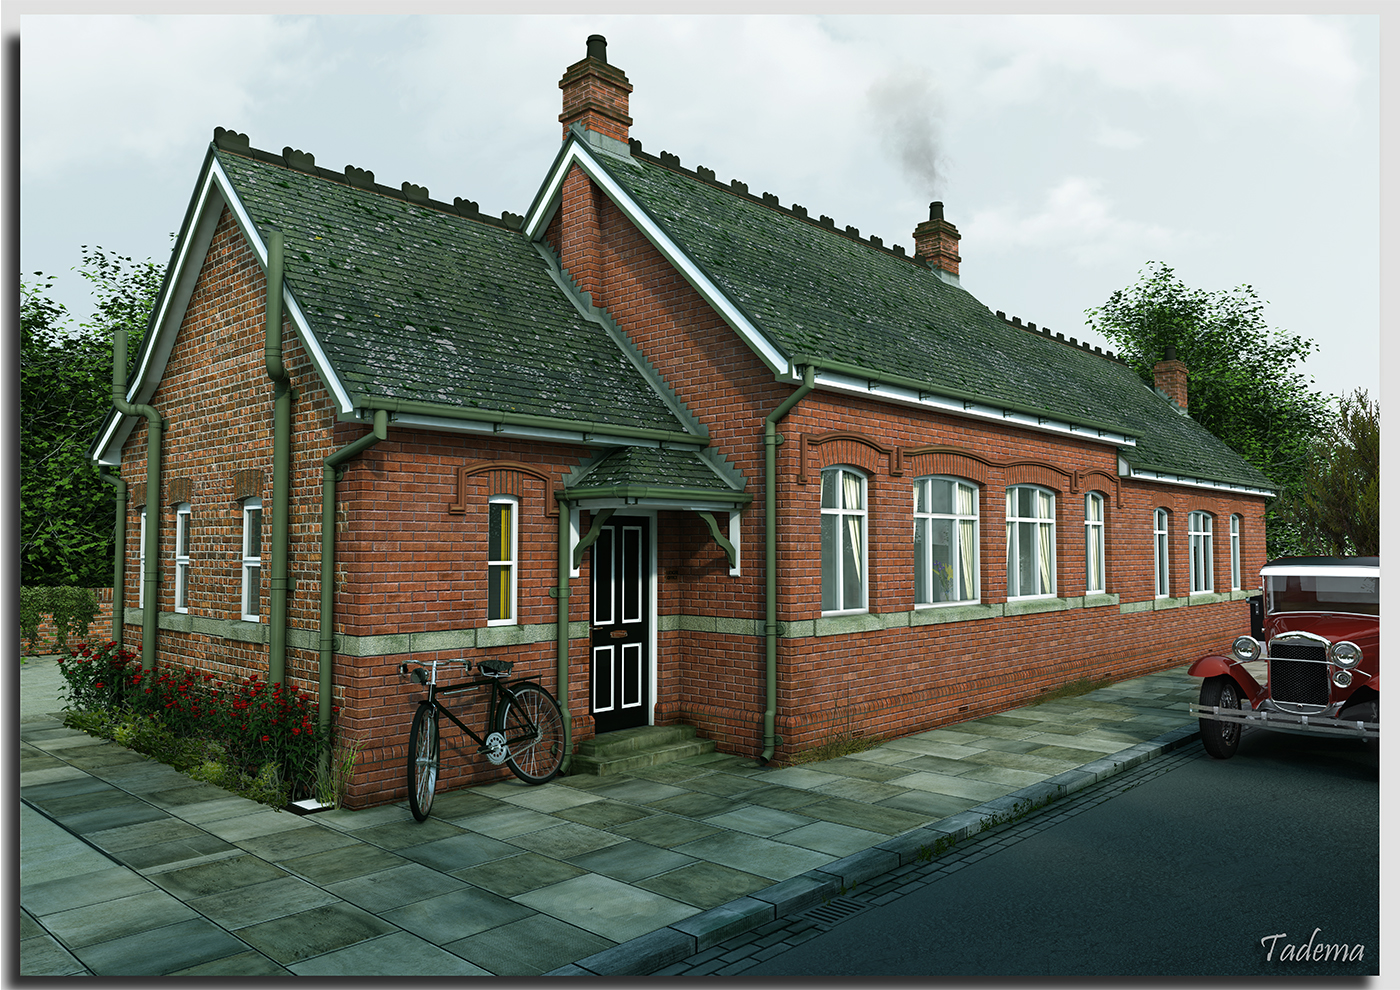 Railway Offices Middleton.jpg